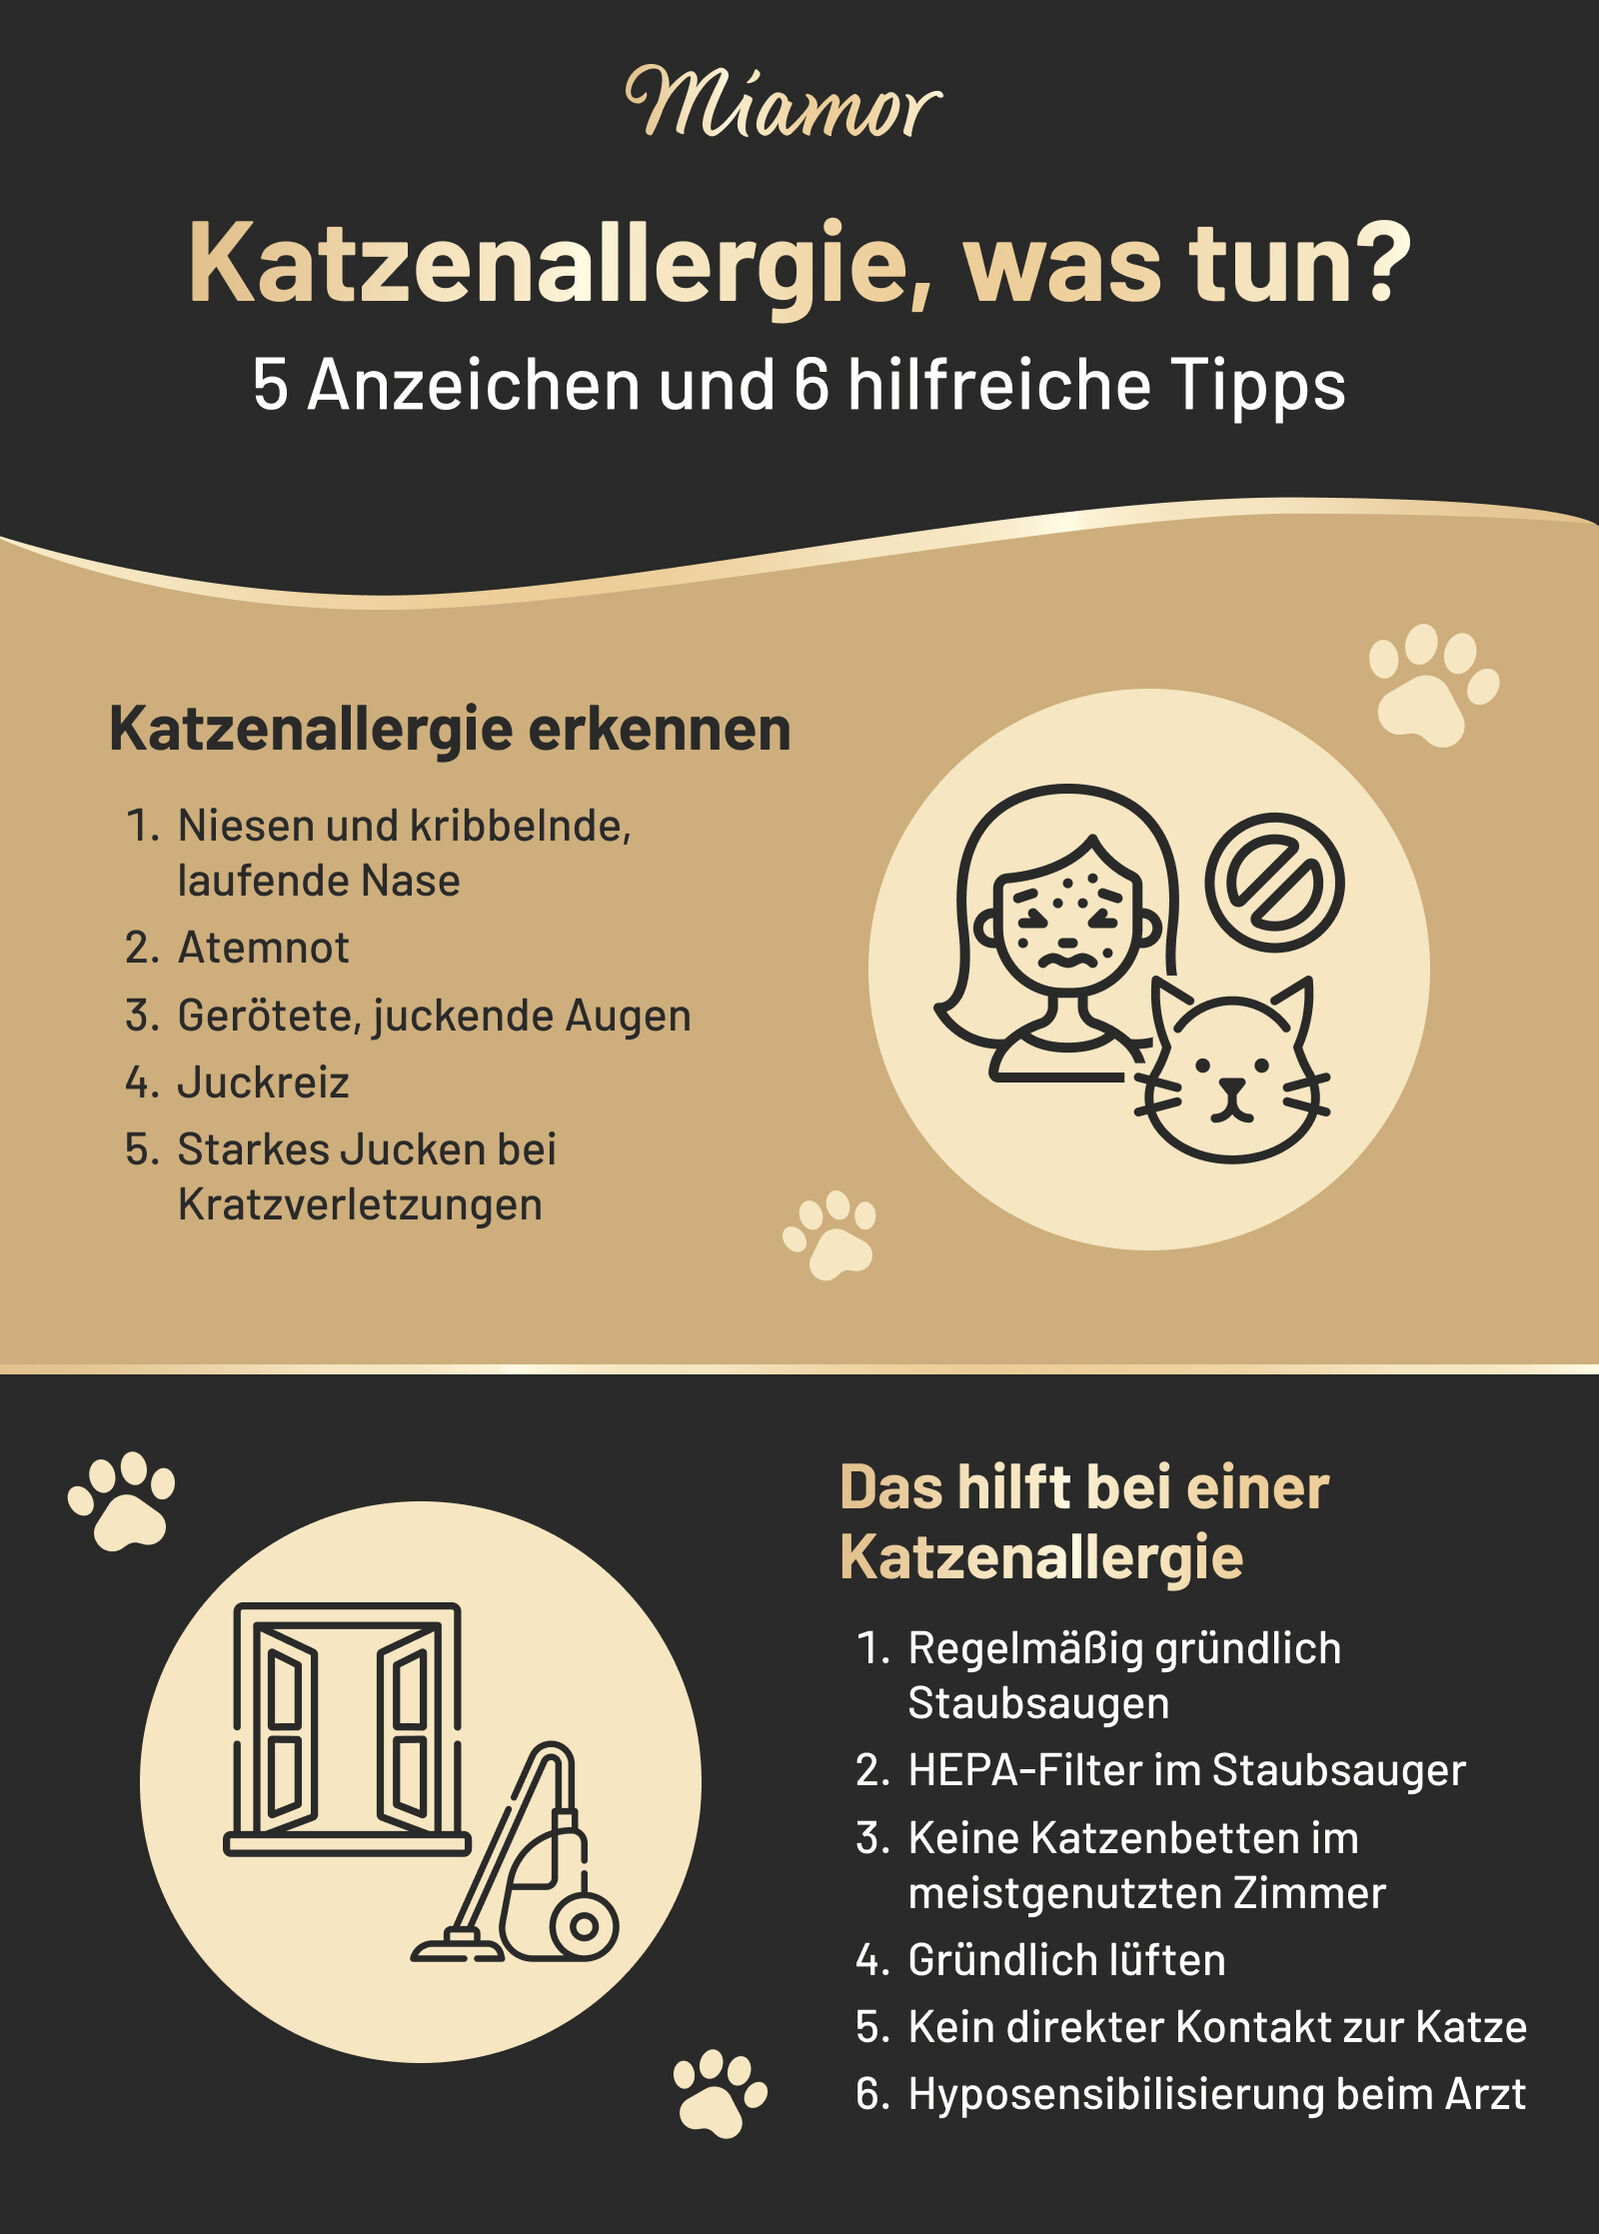 Infografik von Miamor zum Thema Katzenallergie